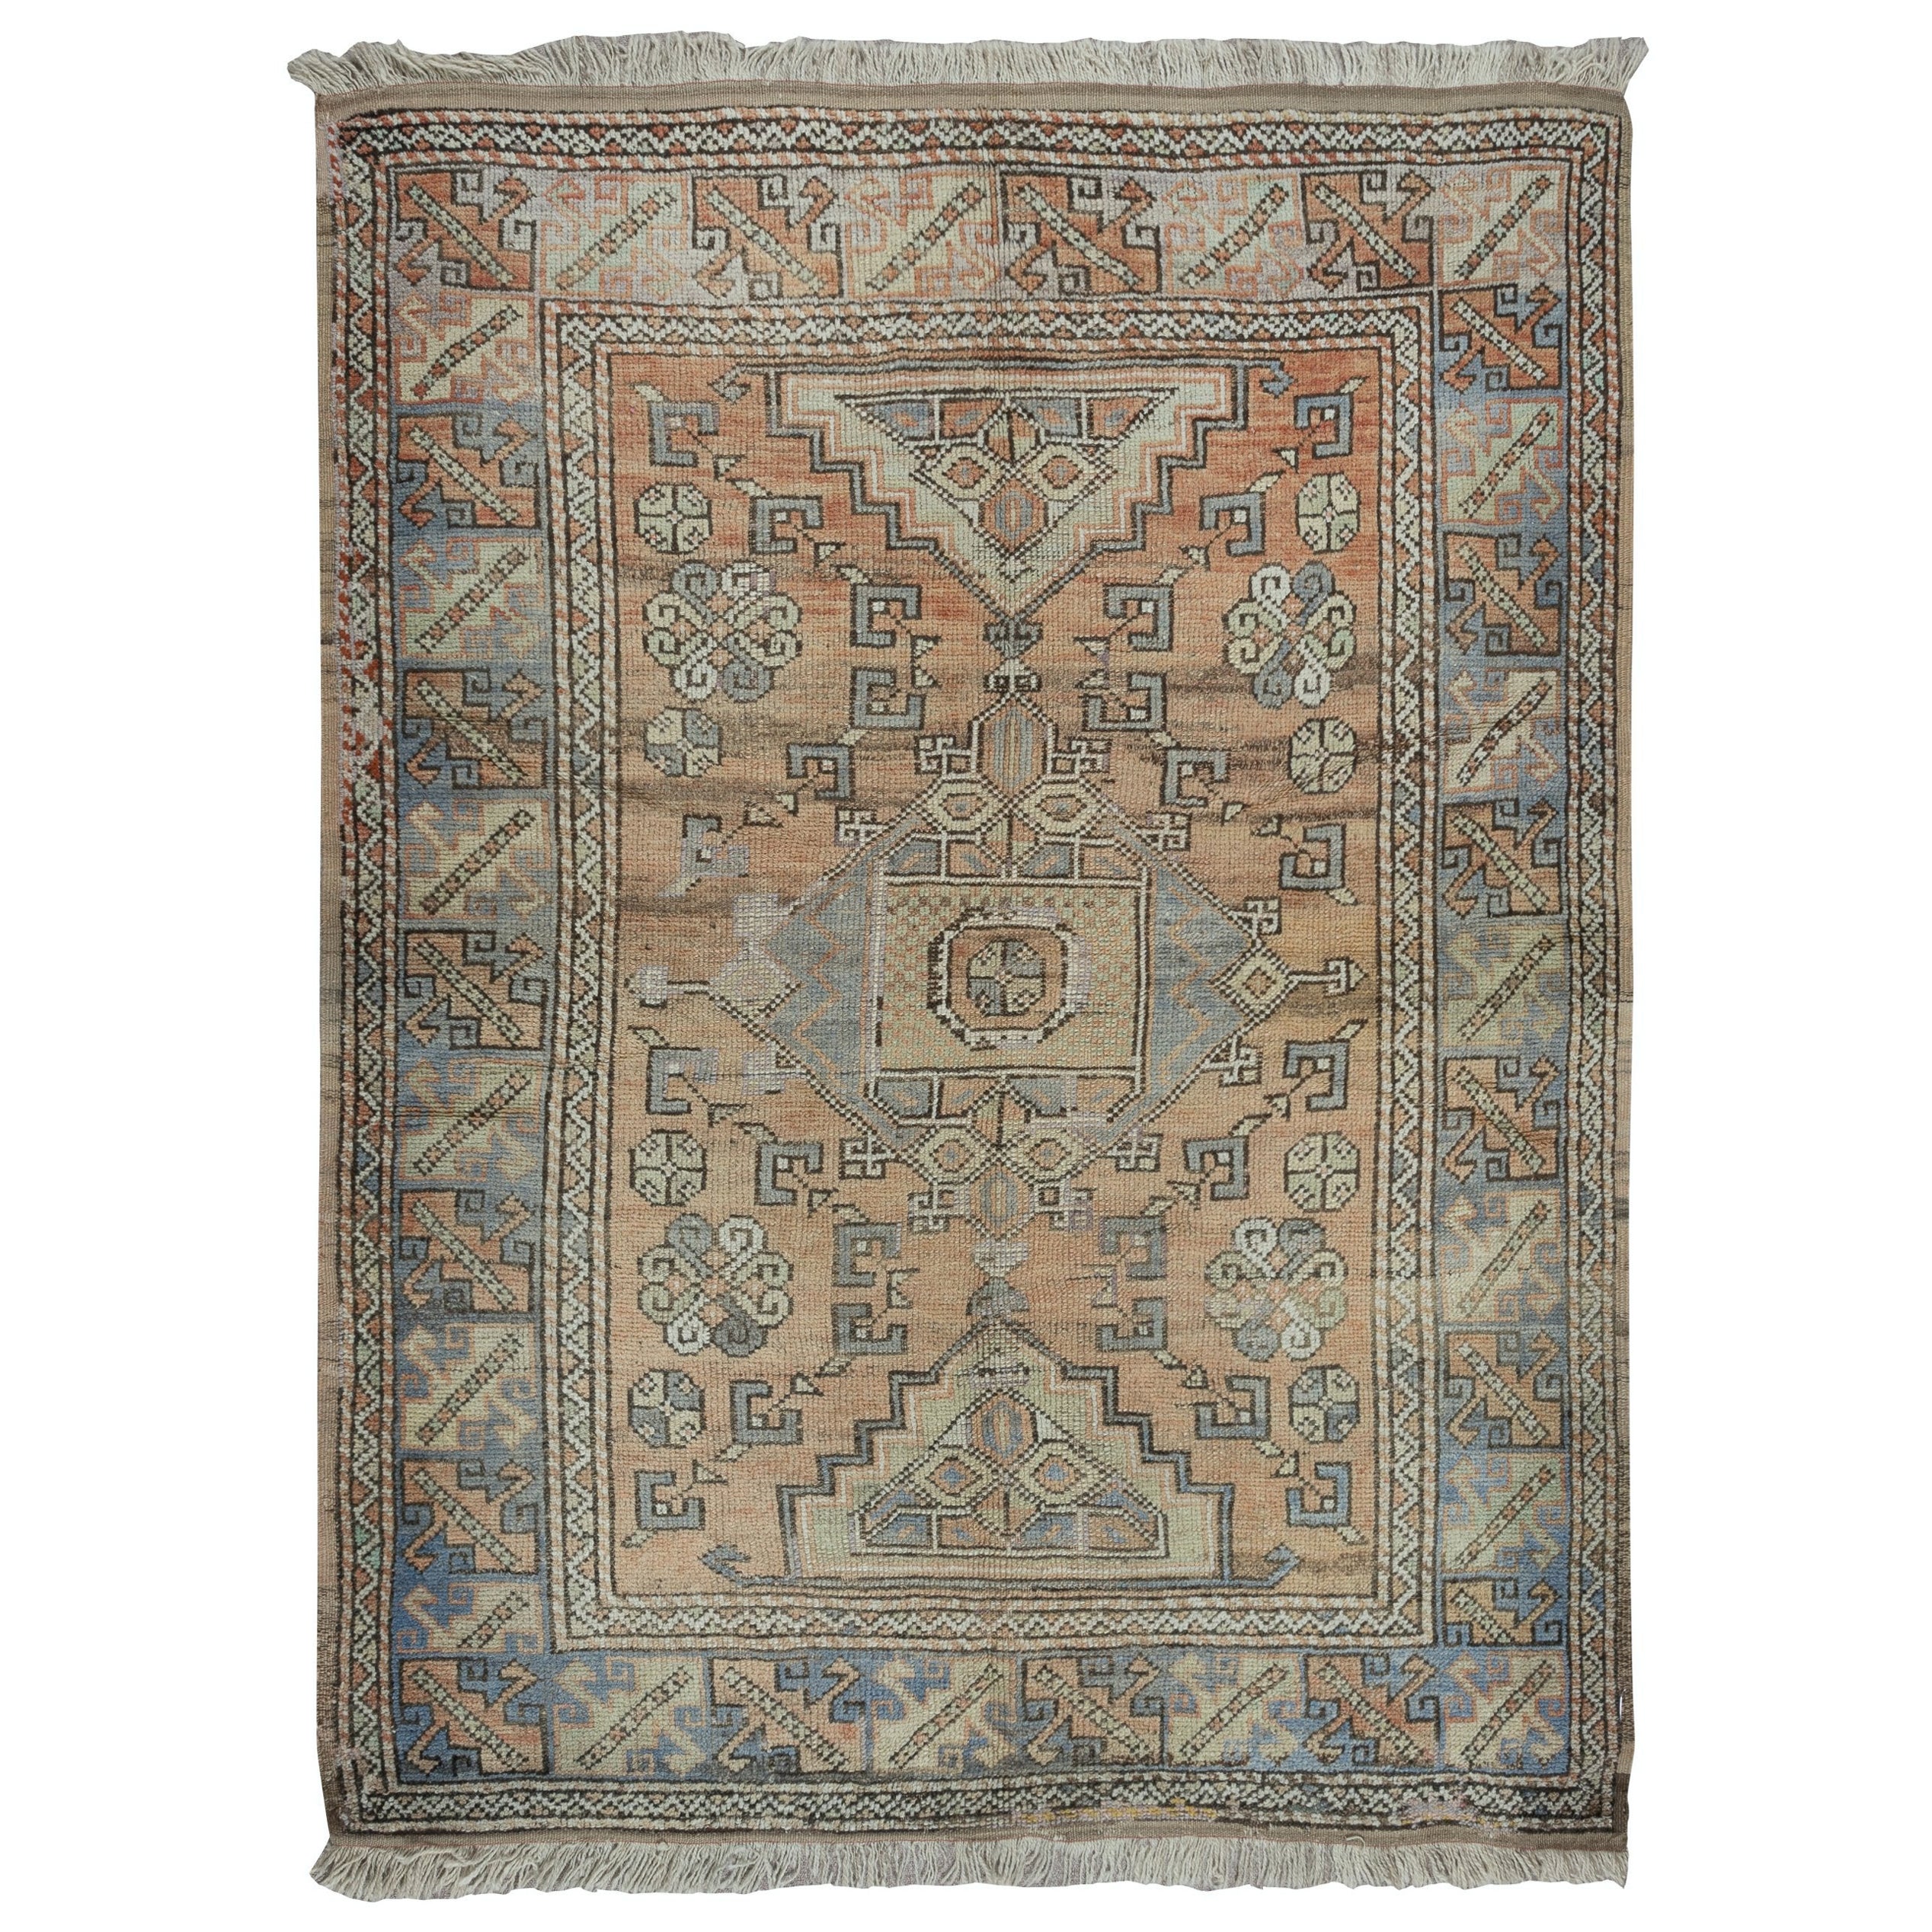 4.8x6 Ft Vintage Handmade Anatolian Wool Area Rug with Geometric Design For Sale